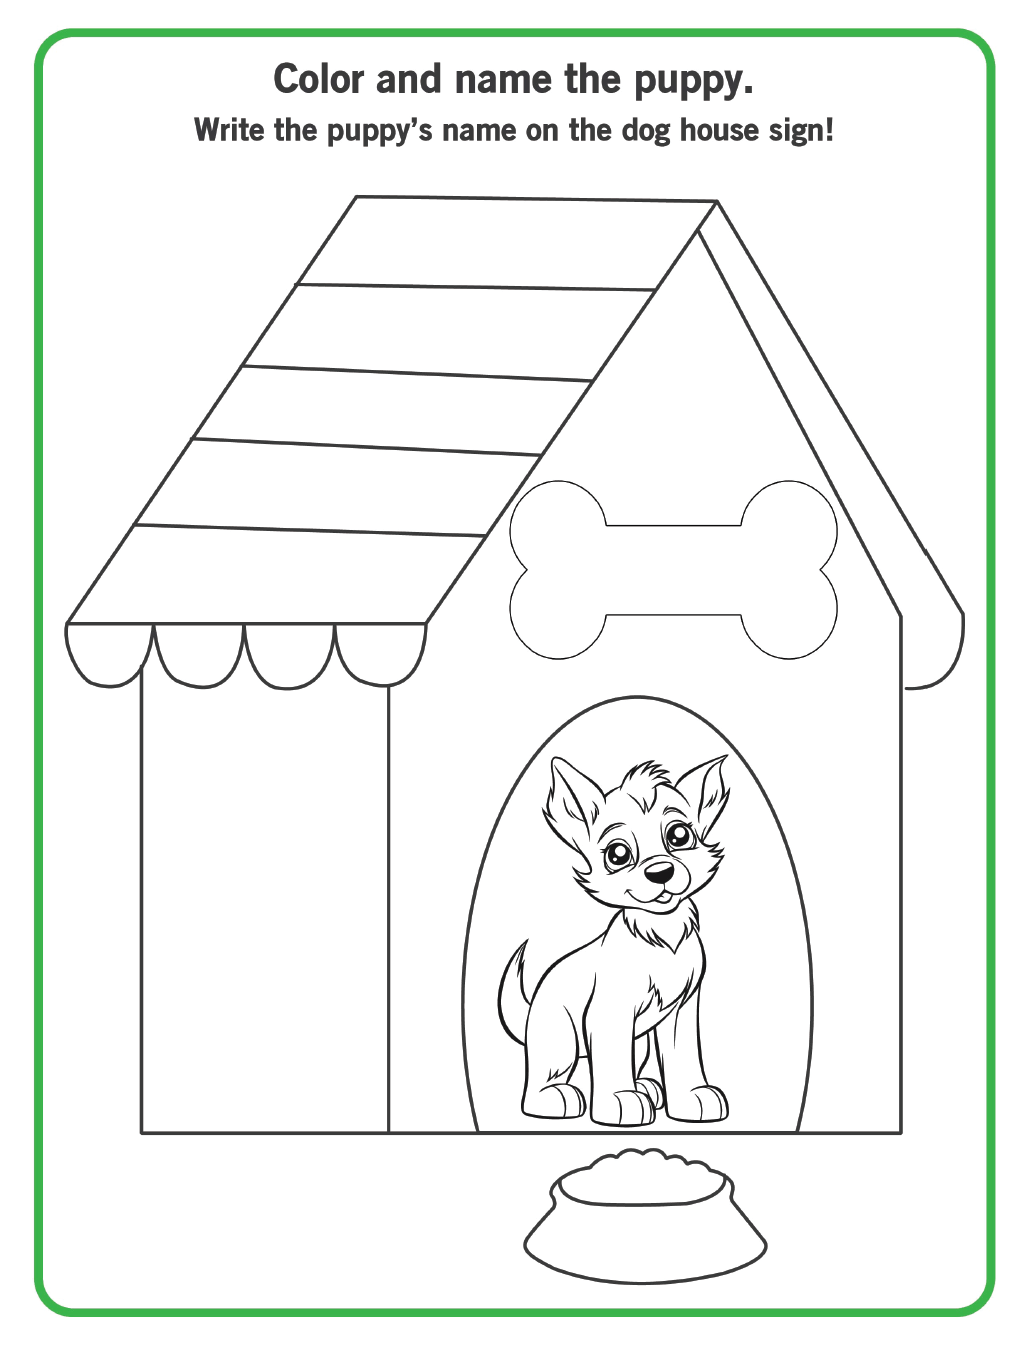 The Ultimate Puppy Dog Preschool Activity Book